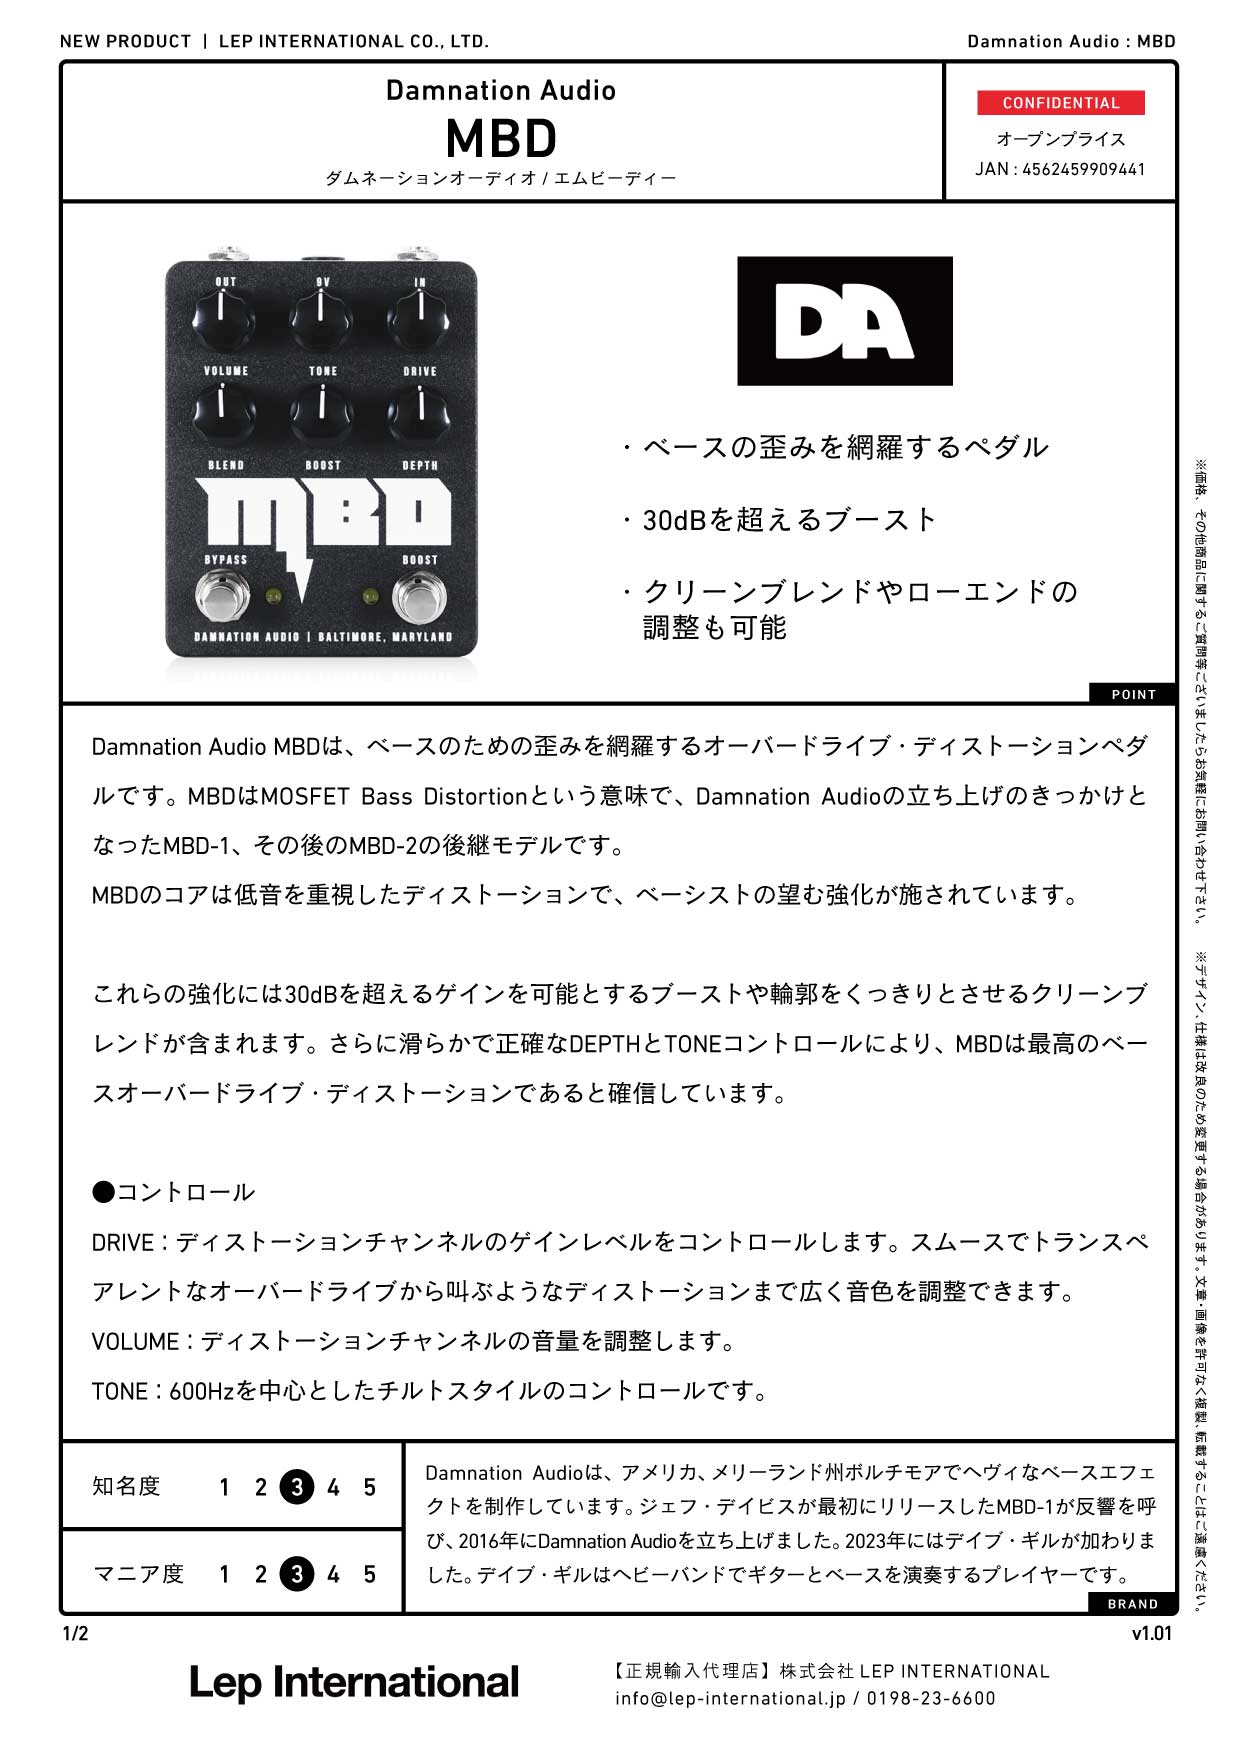 Damnation Audio / MBD